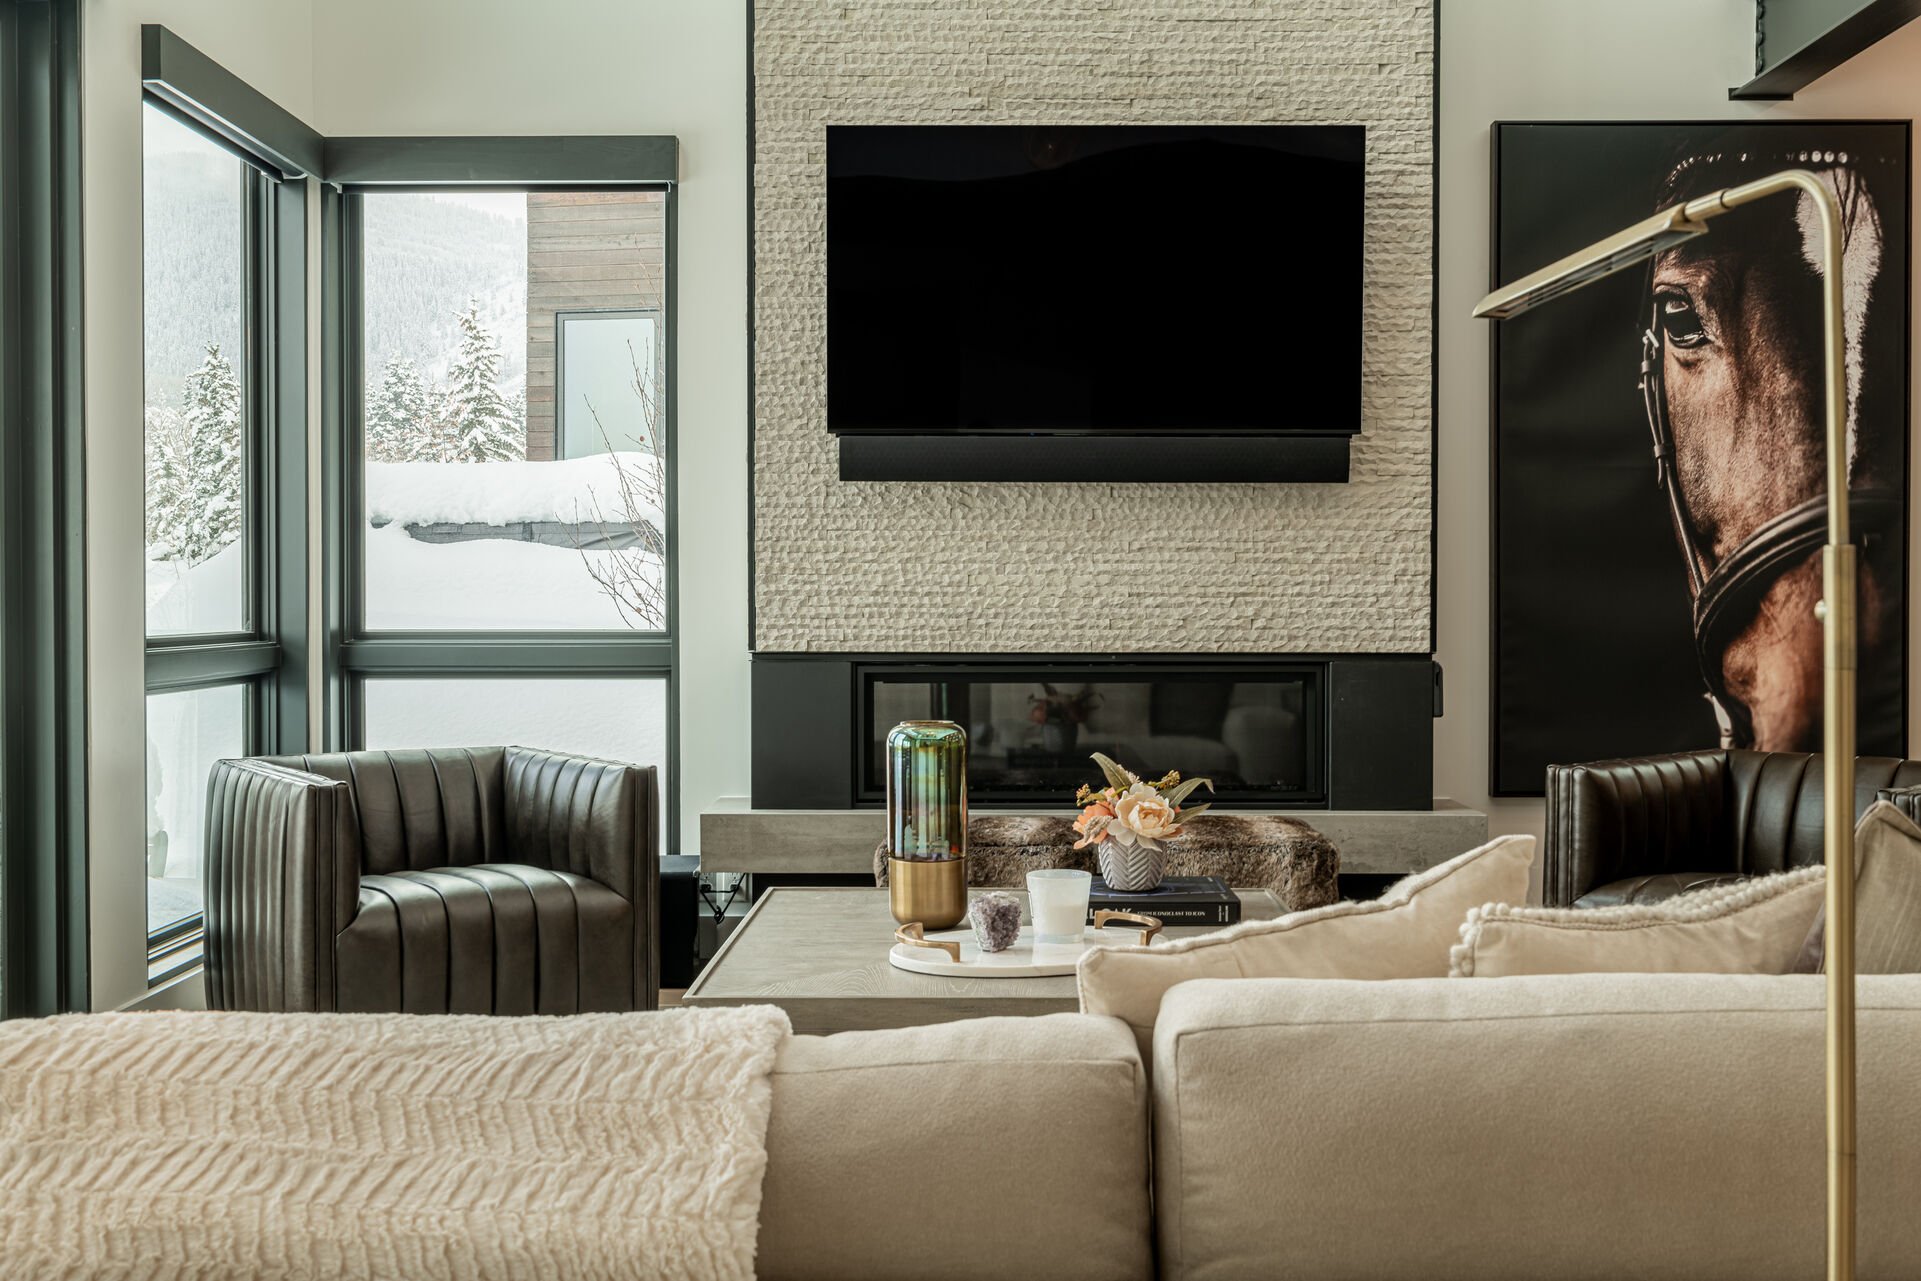 Cozy Gas Fireplace and Smart TV with Soundbar